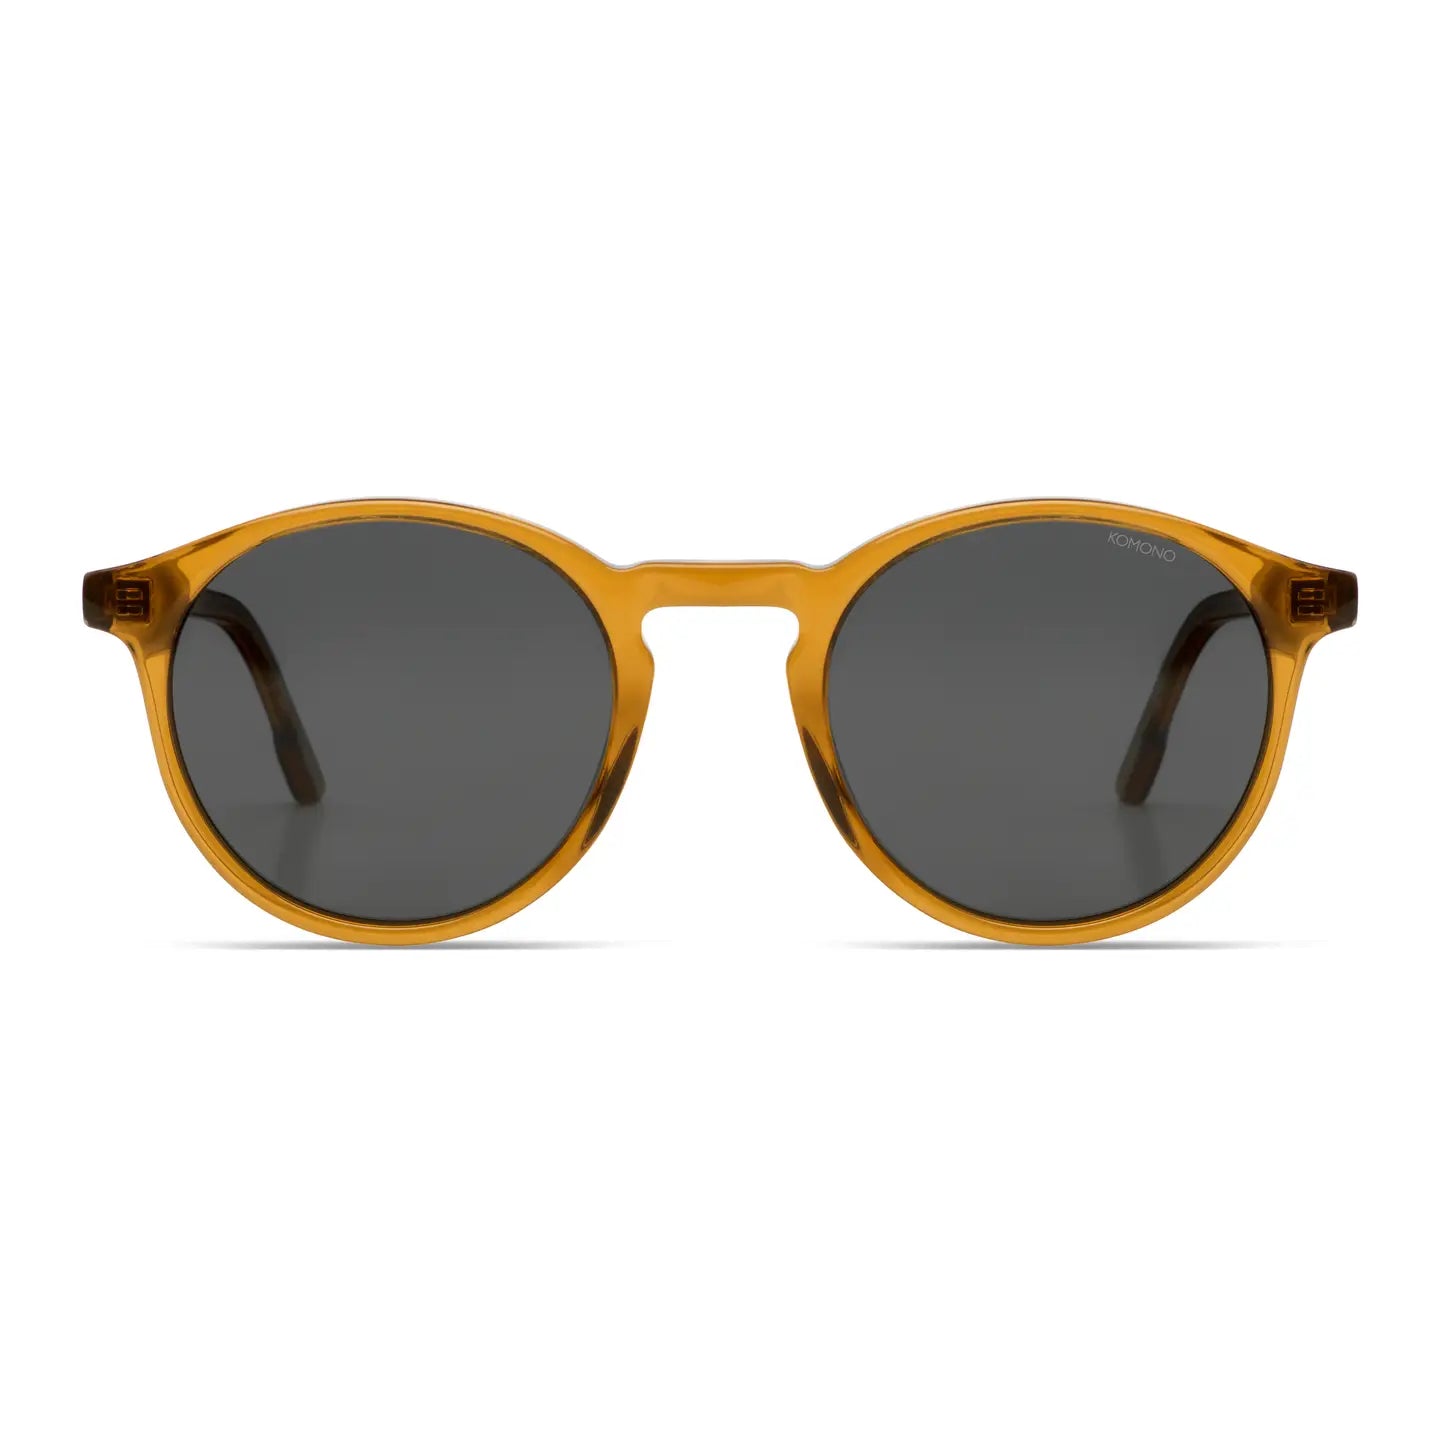 Archie Grand Sands Sunglasses